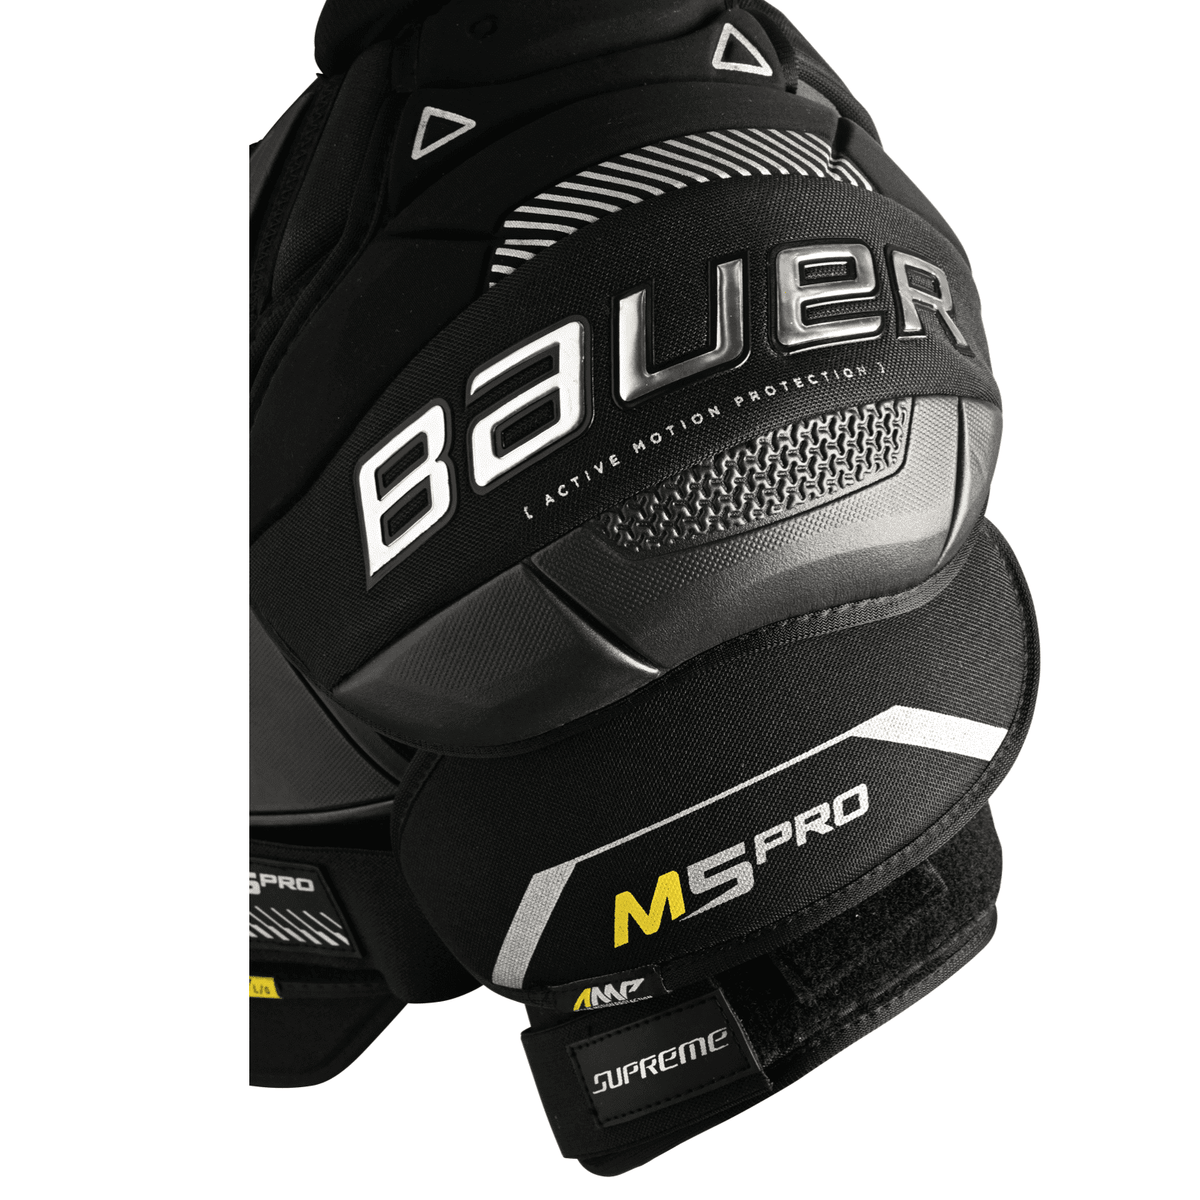 Bauer Supreme M5 Pro Shoulder Pads Intermediate